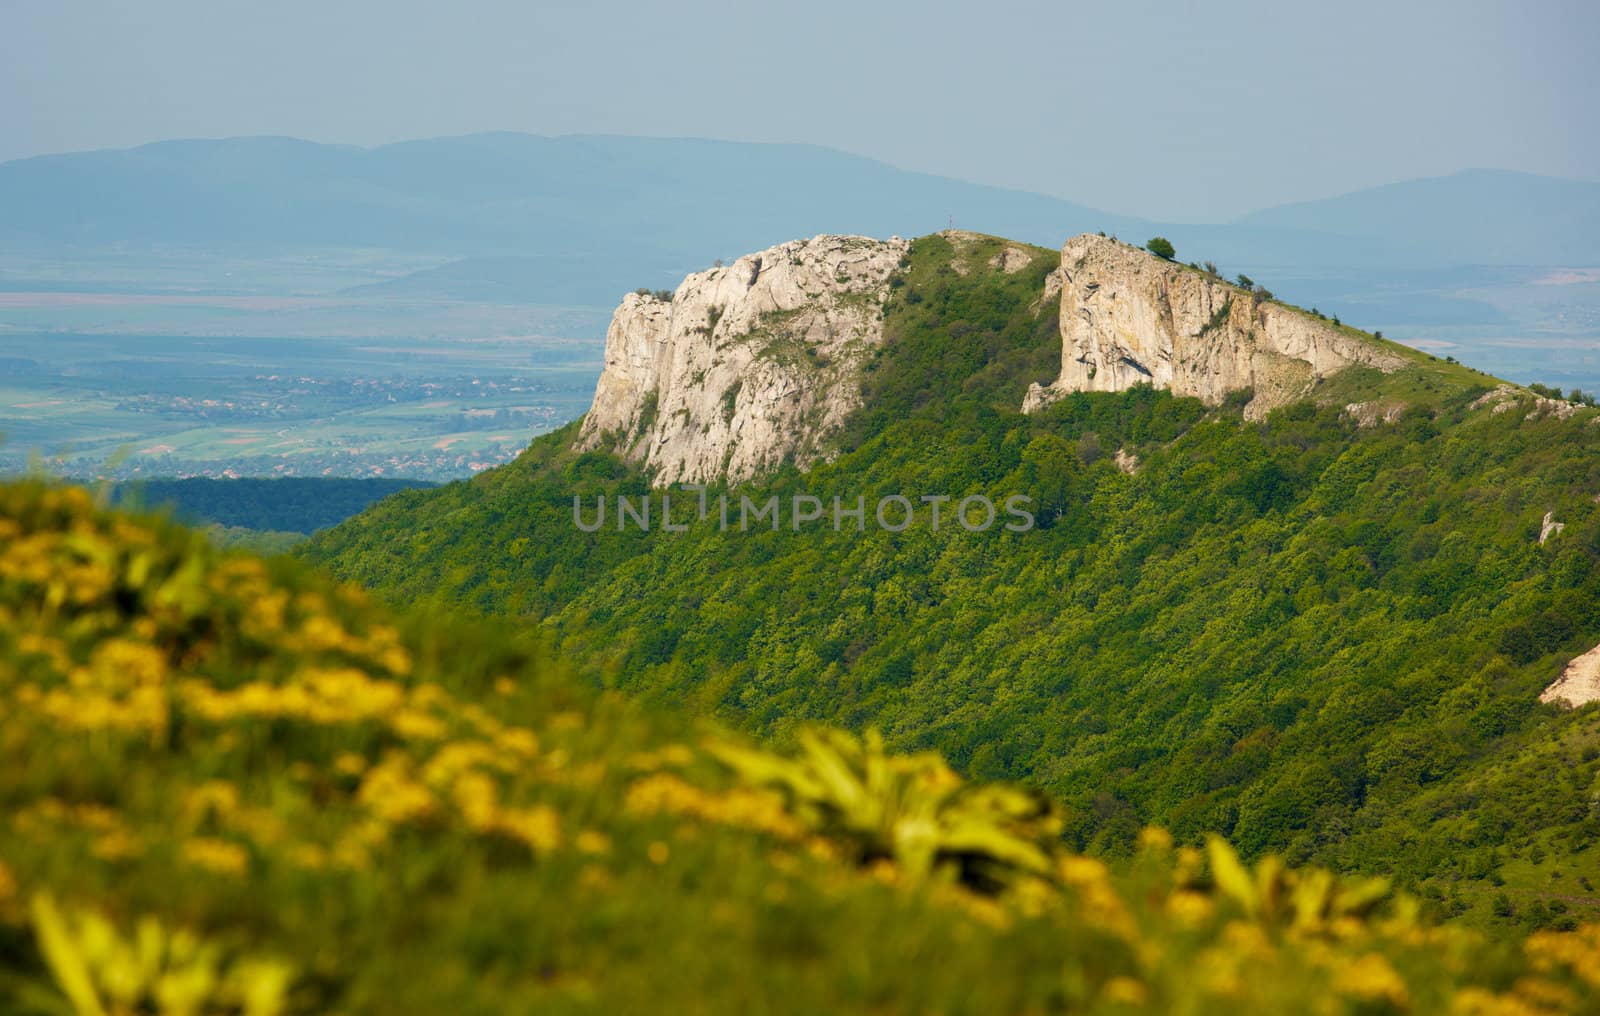 Landscape with the Urushki rocks near Kotel, Bulgaria